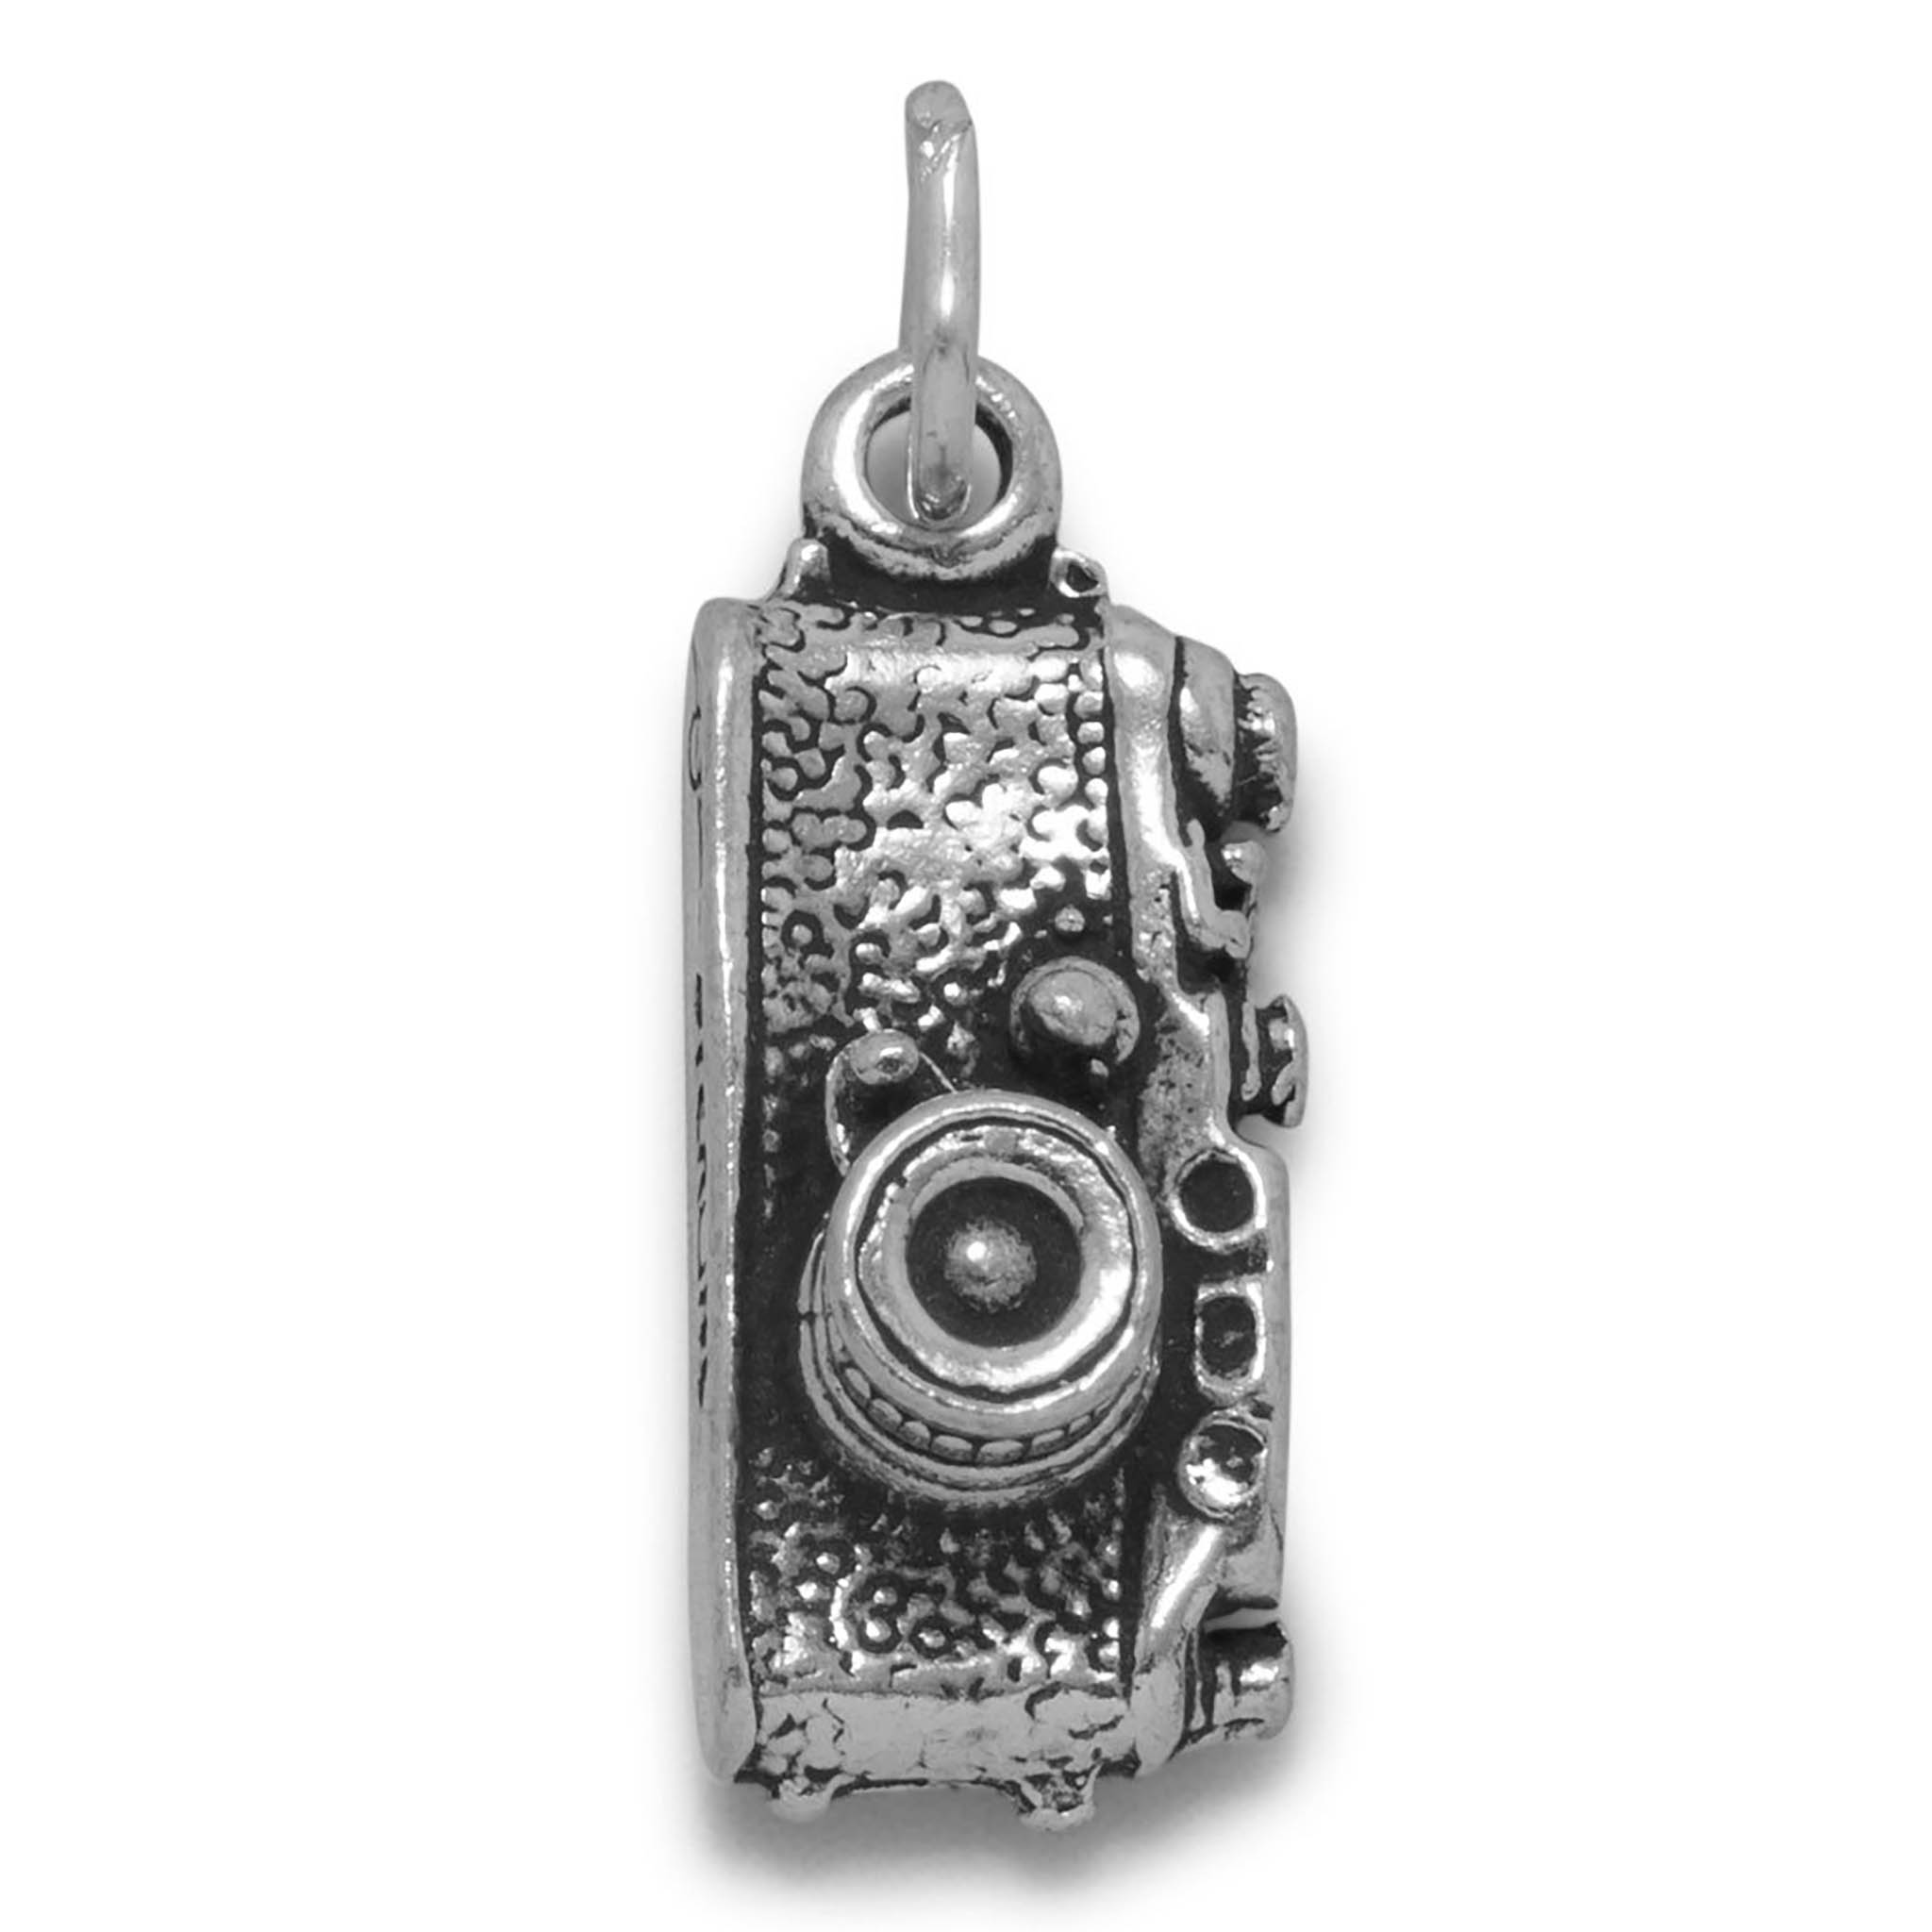 Vintage Style Camera Charm